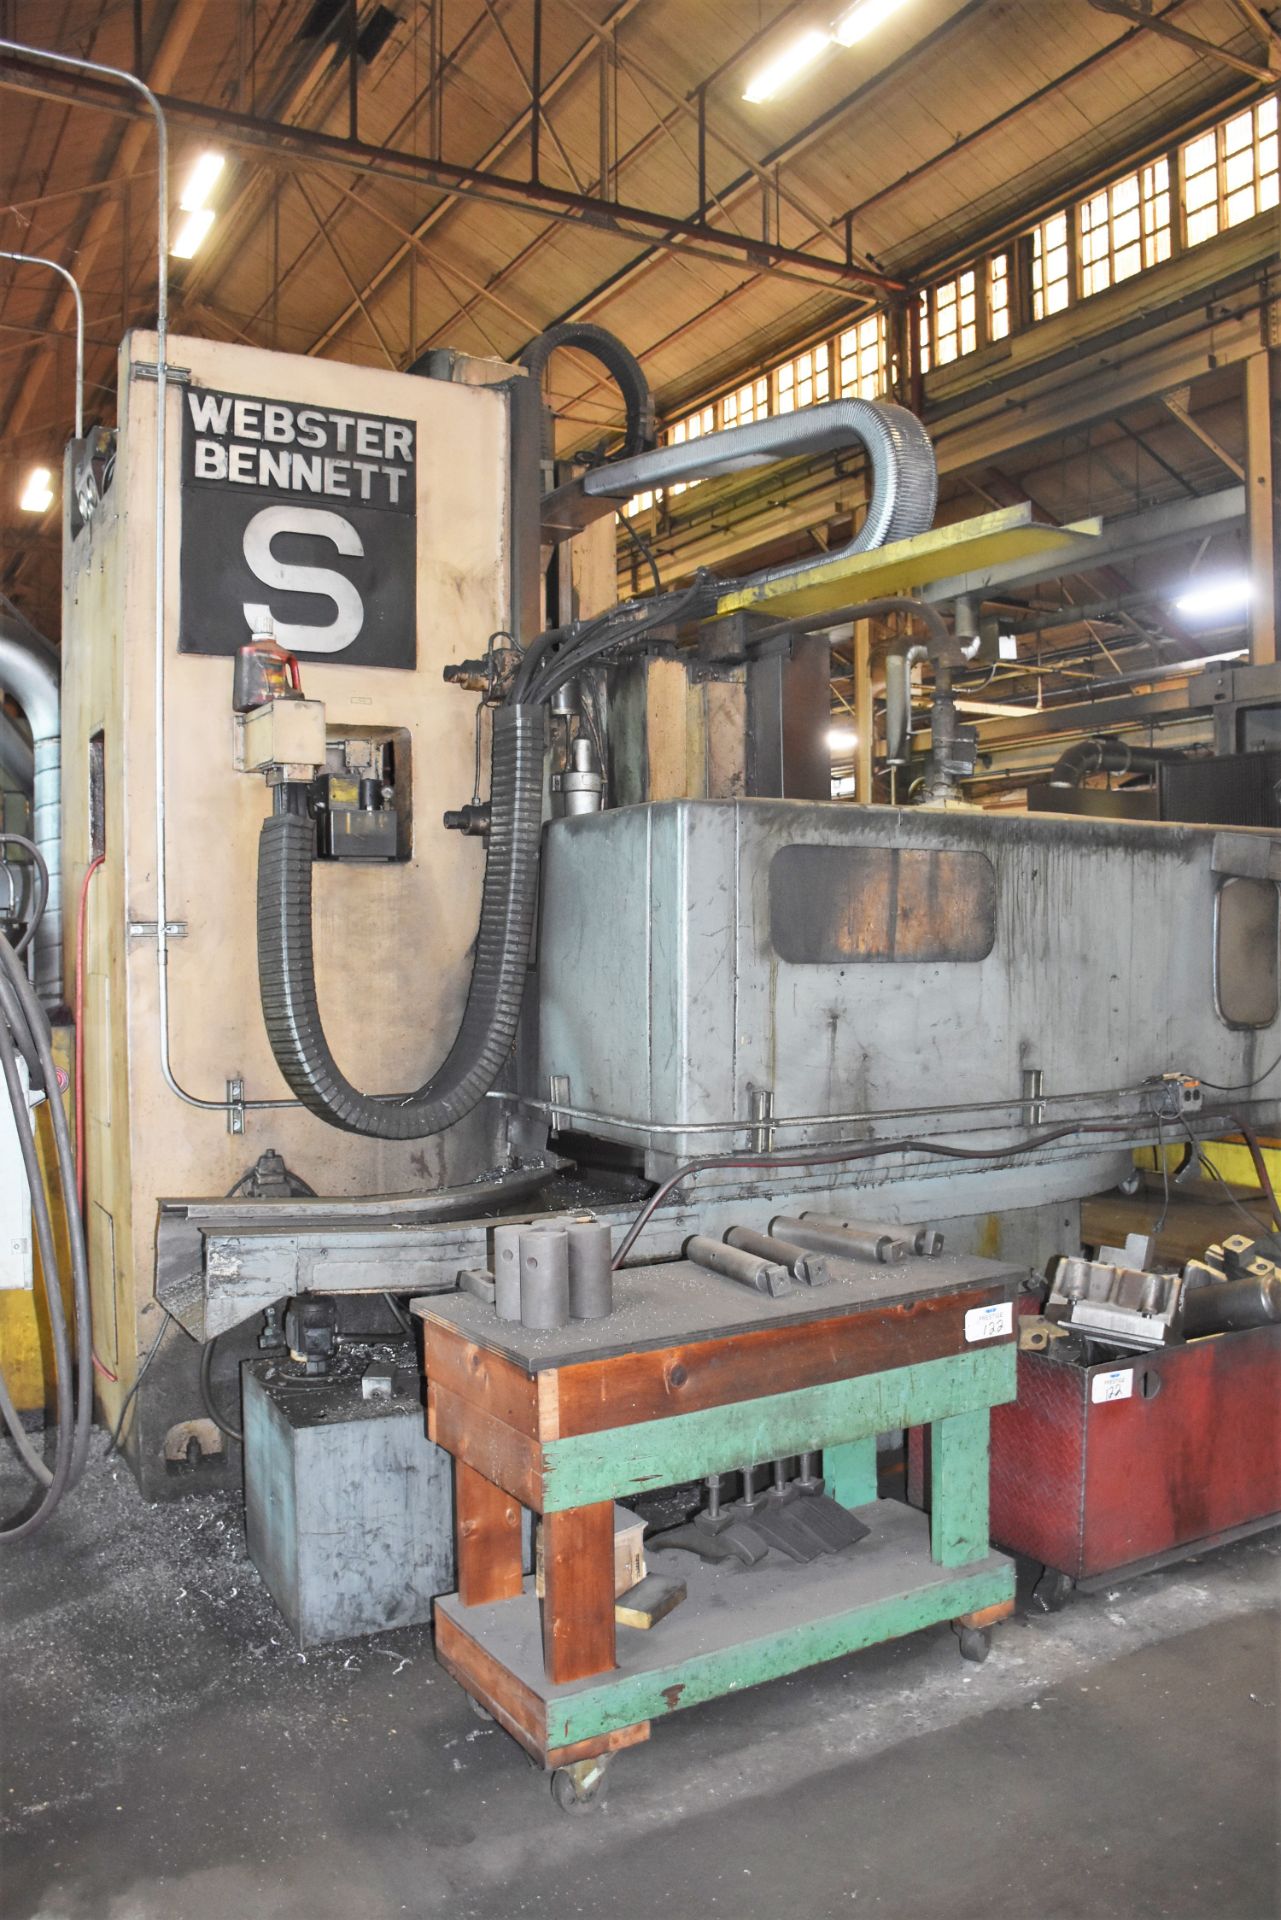 Webster Bennett Series “S” CNC Vertical Boring Mill - Image 5 of 6